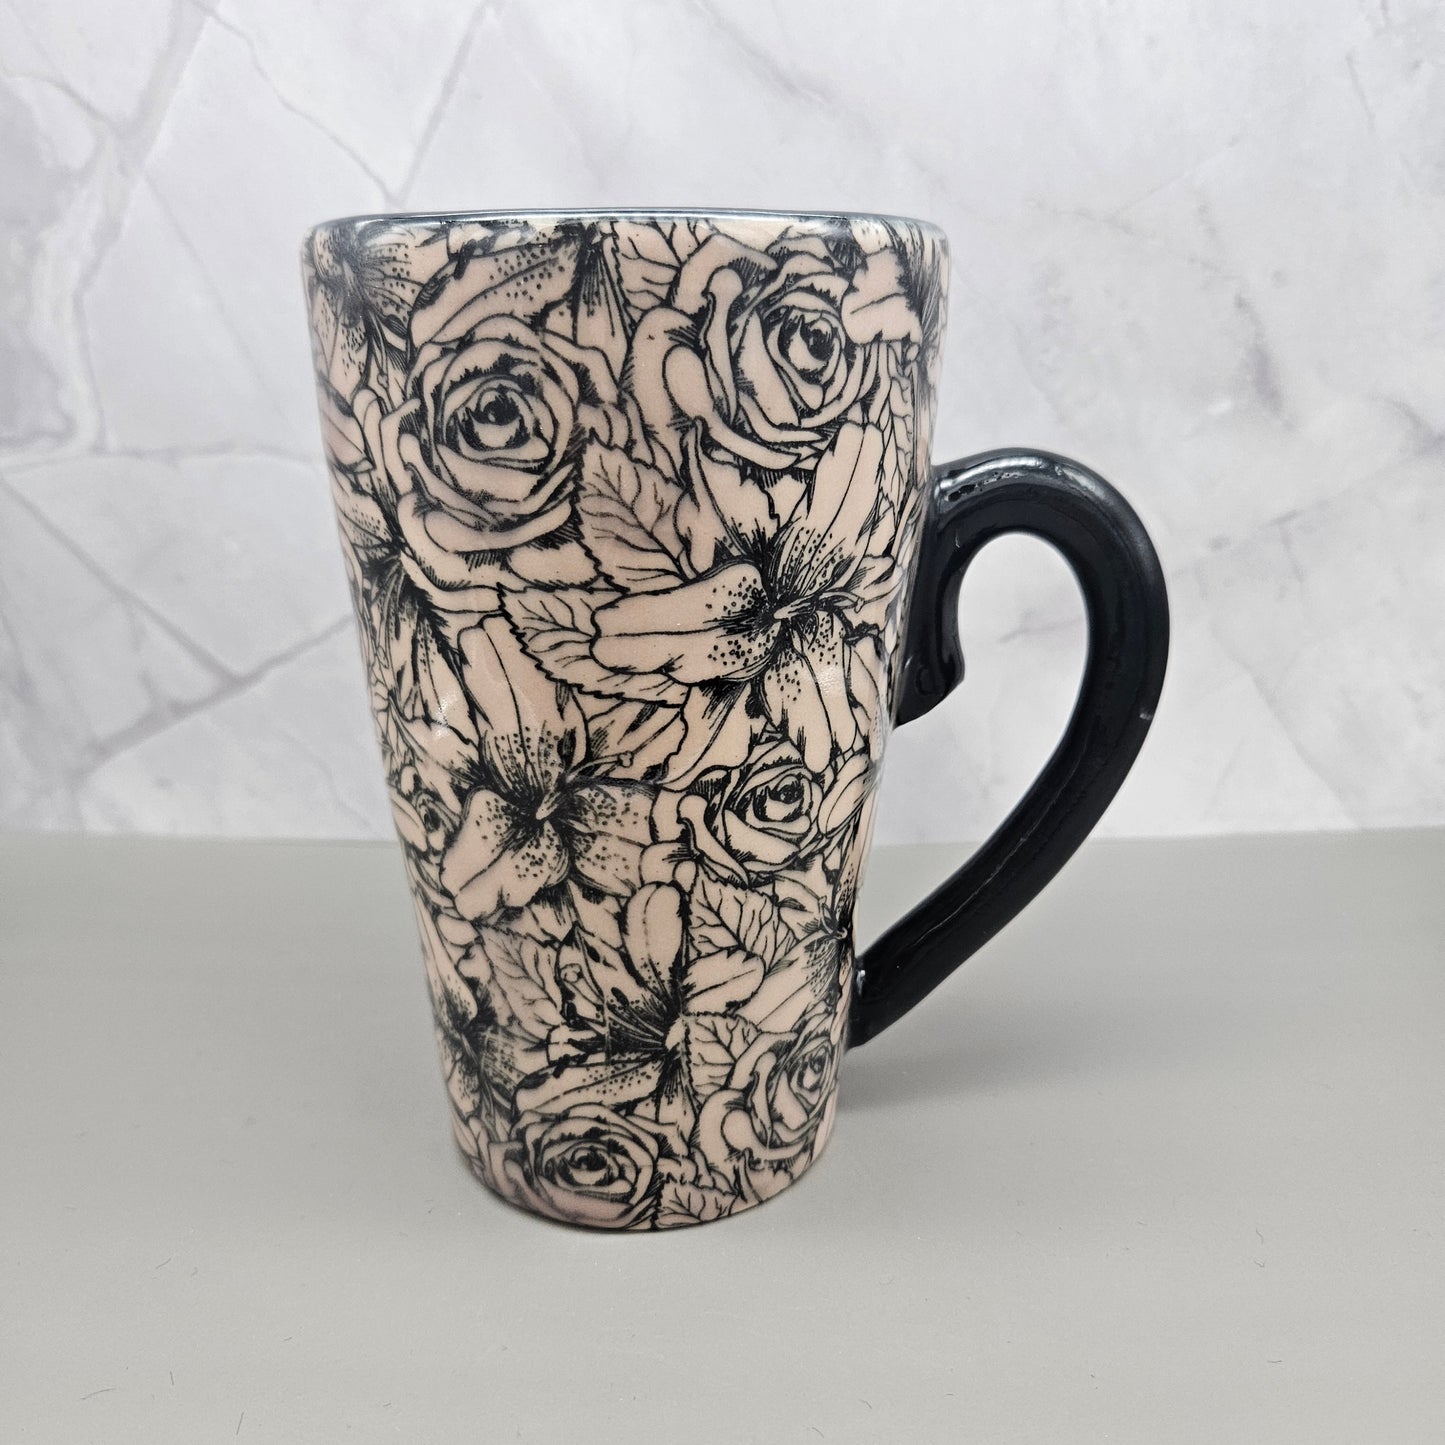 Pink Rose and Lily mug, 16 oz, black interior